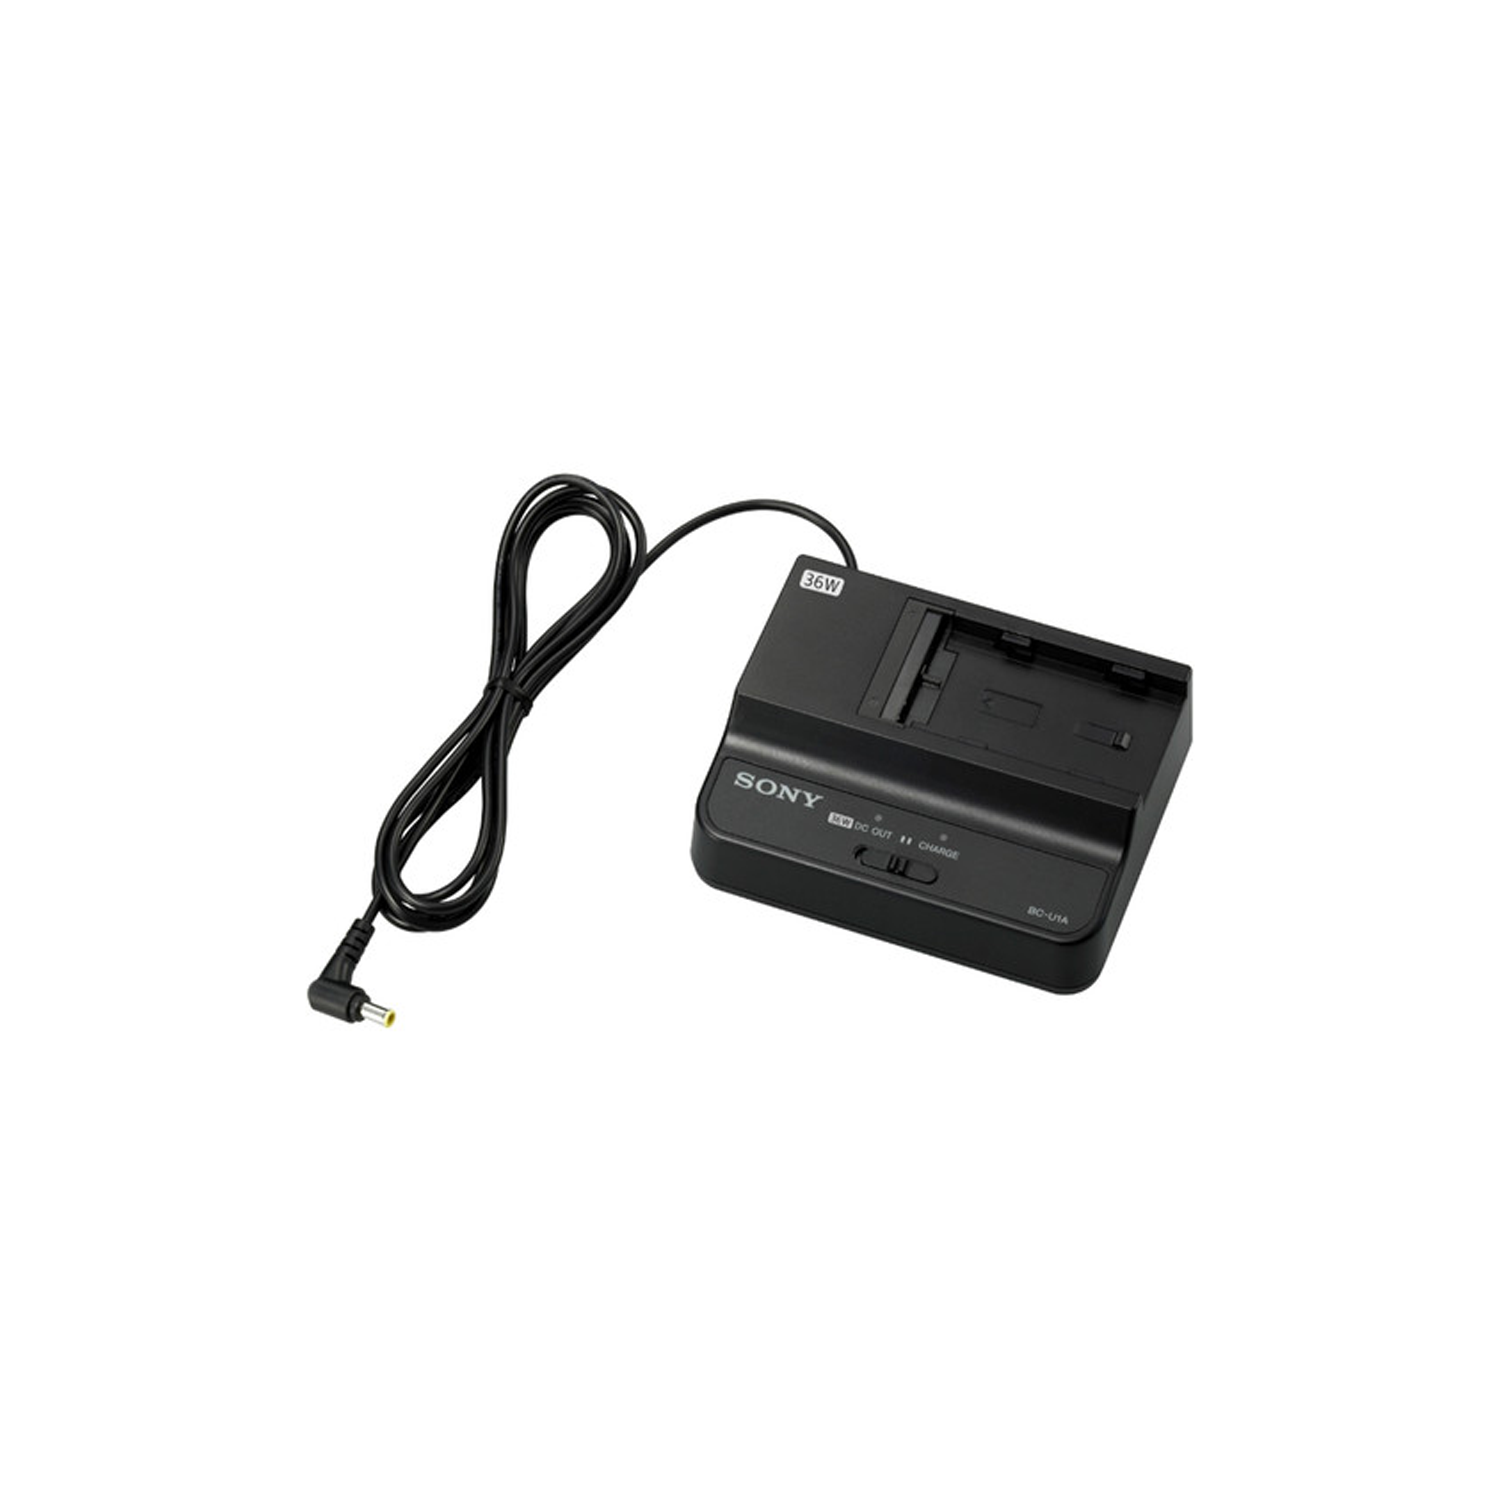 Sony BC-U1A Battery Charger / AC Adapter for BP-U90, U60, U60T, U30